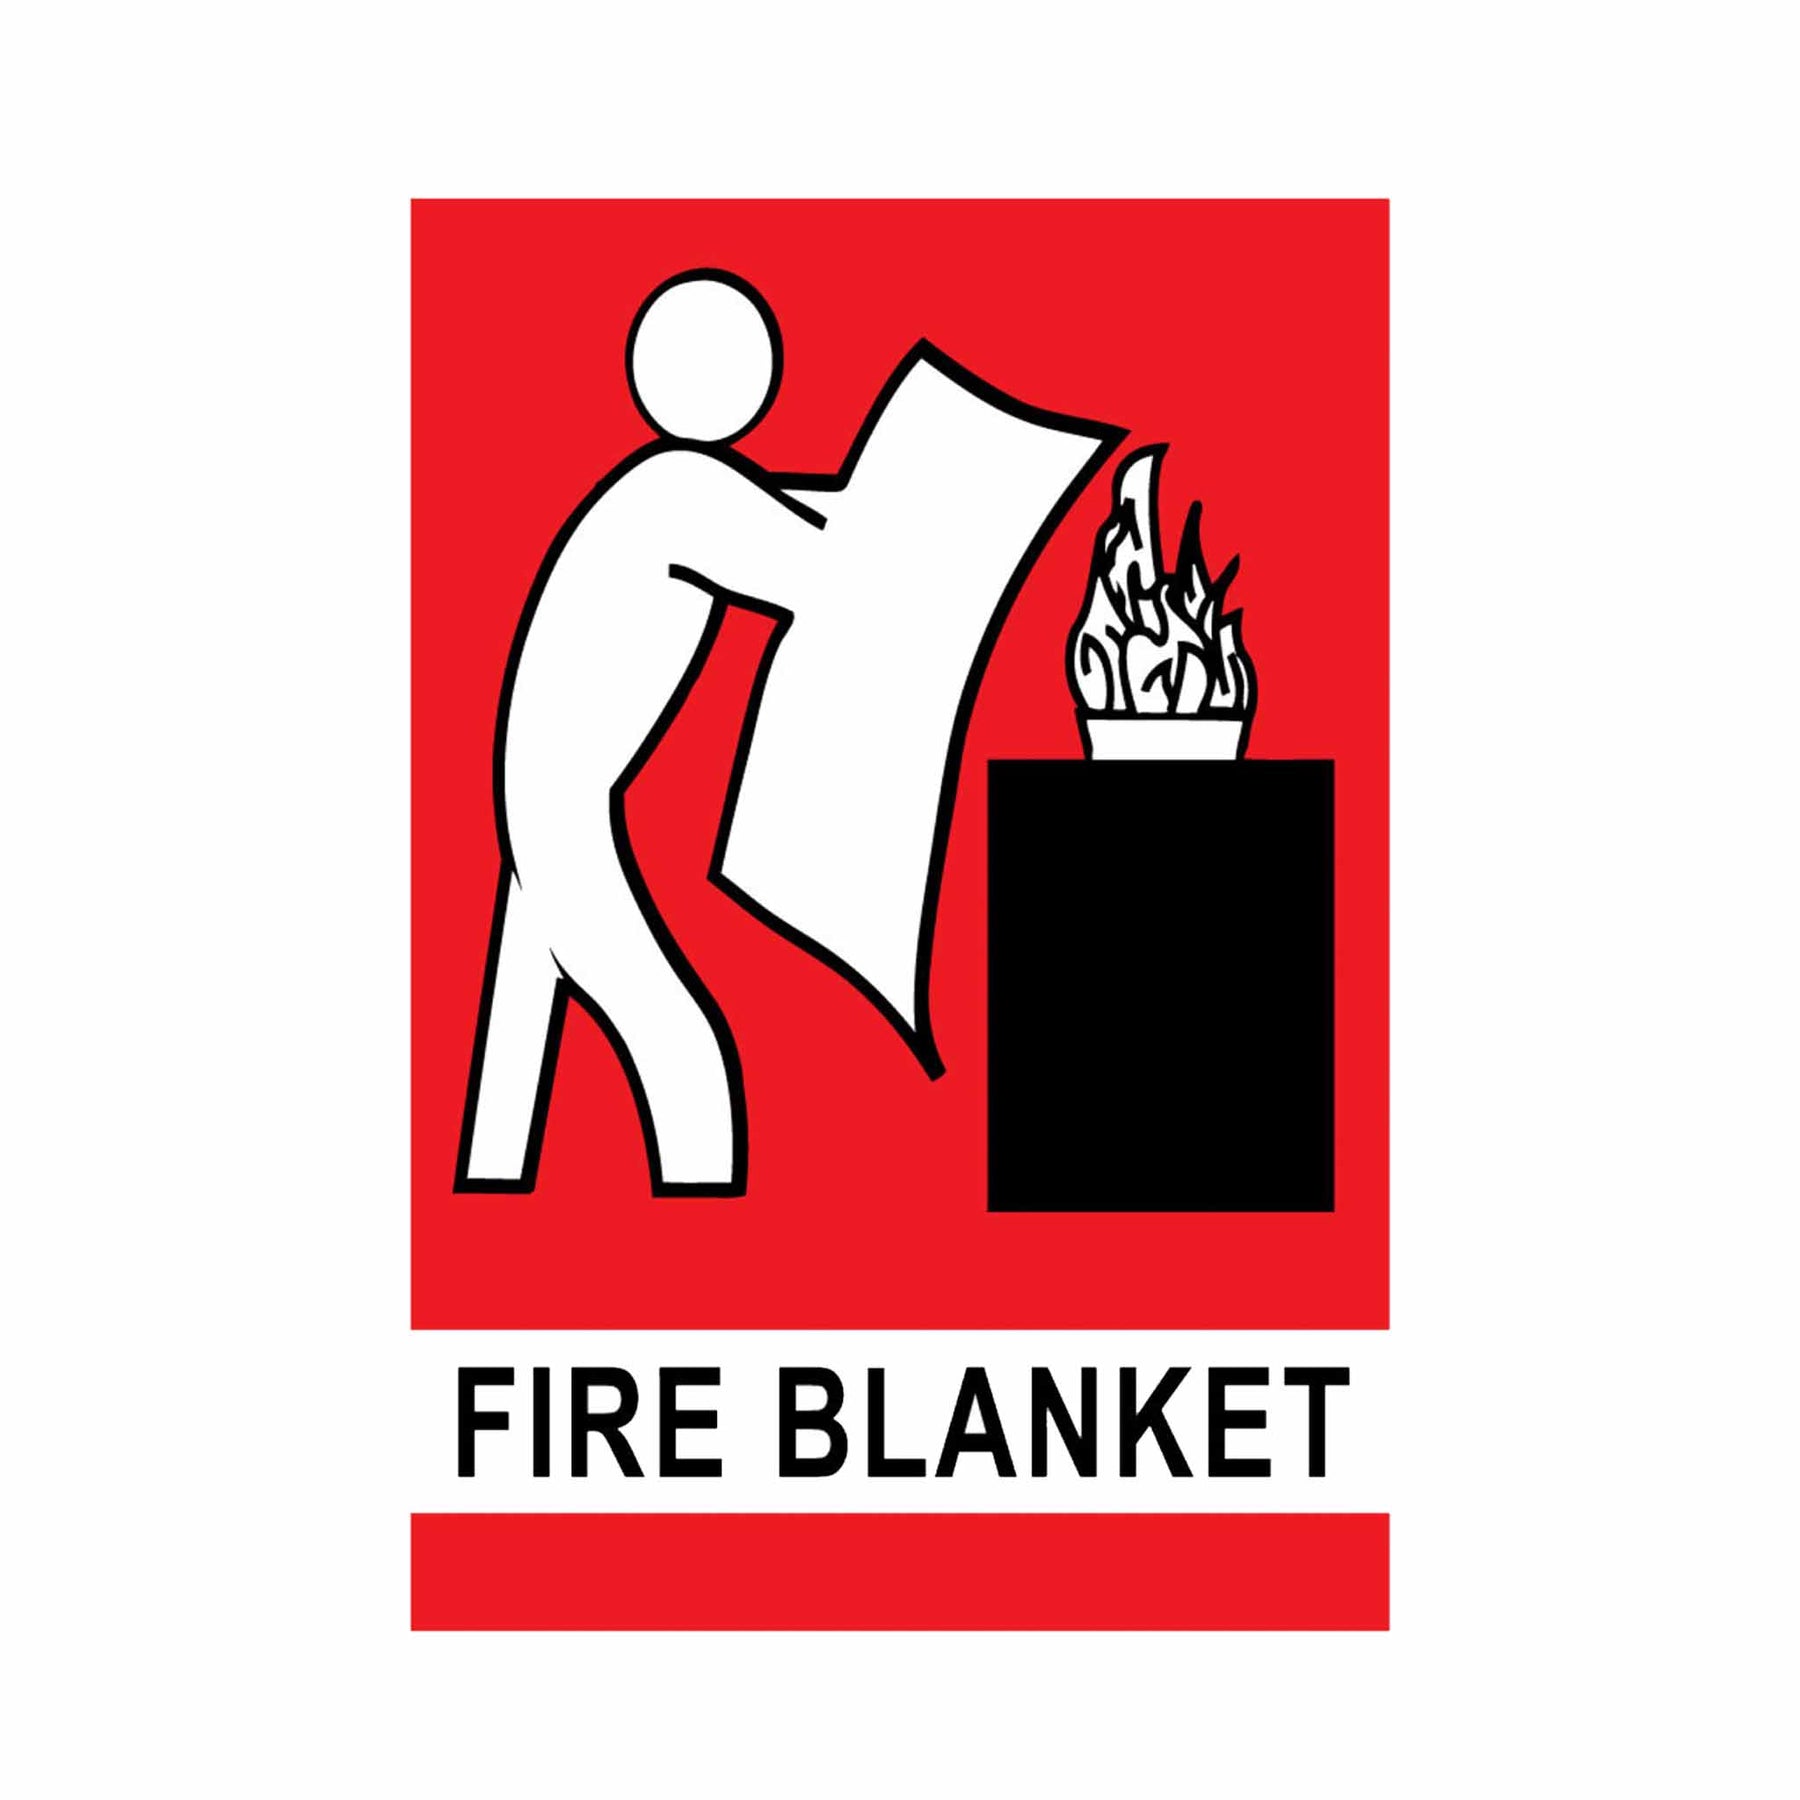 FIRE BLANKET - LOCATION SIGN - MFSB